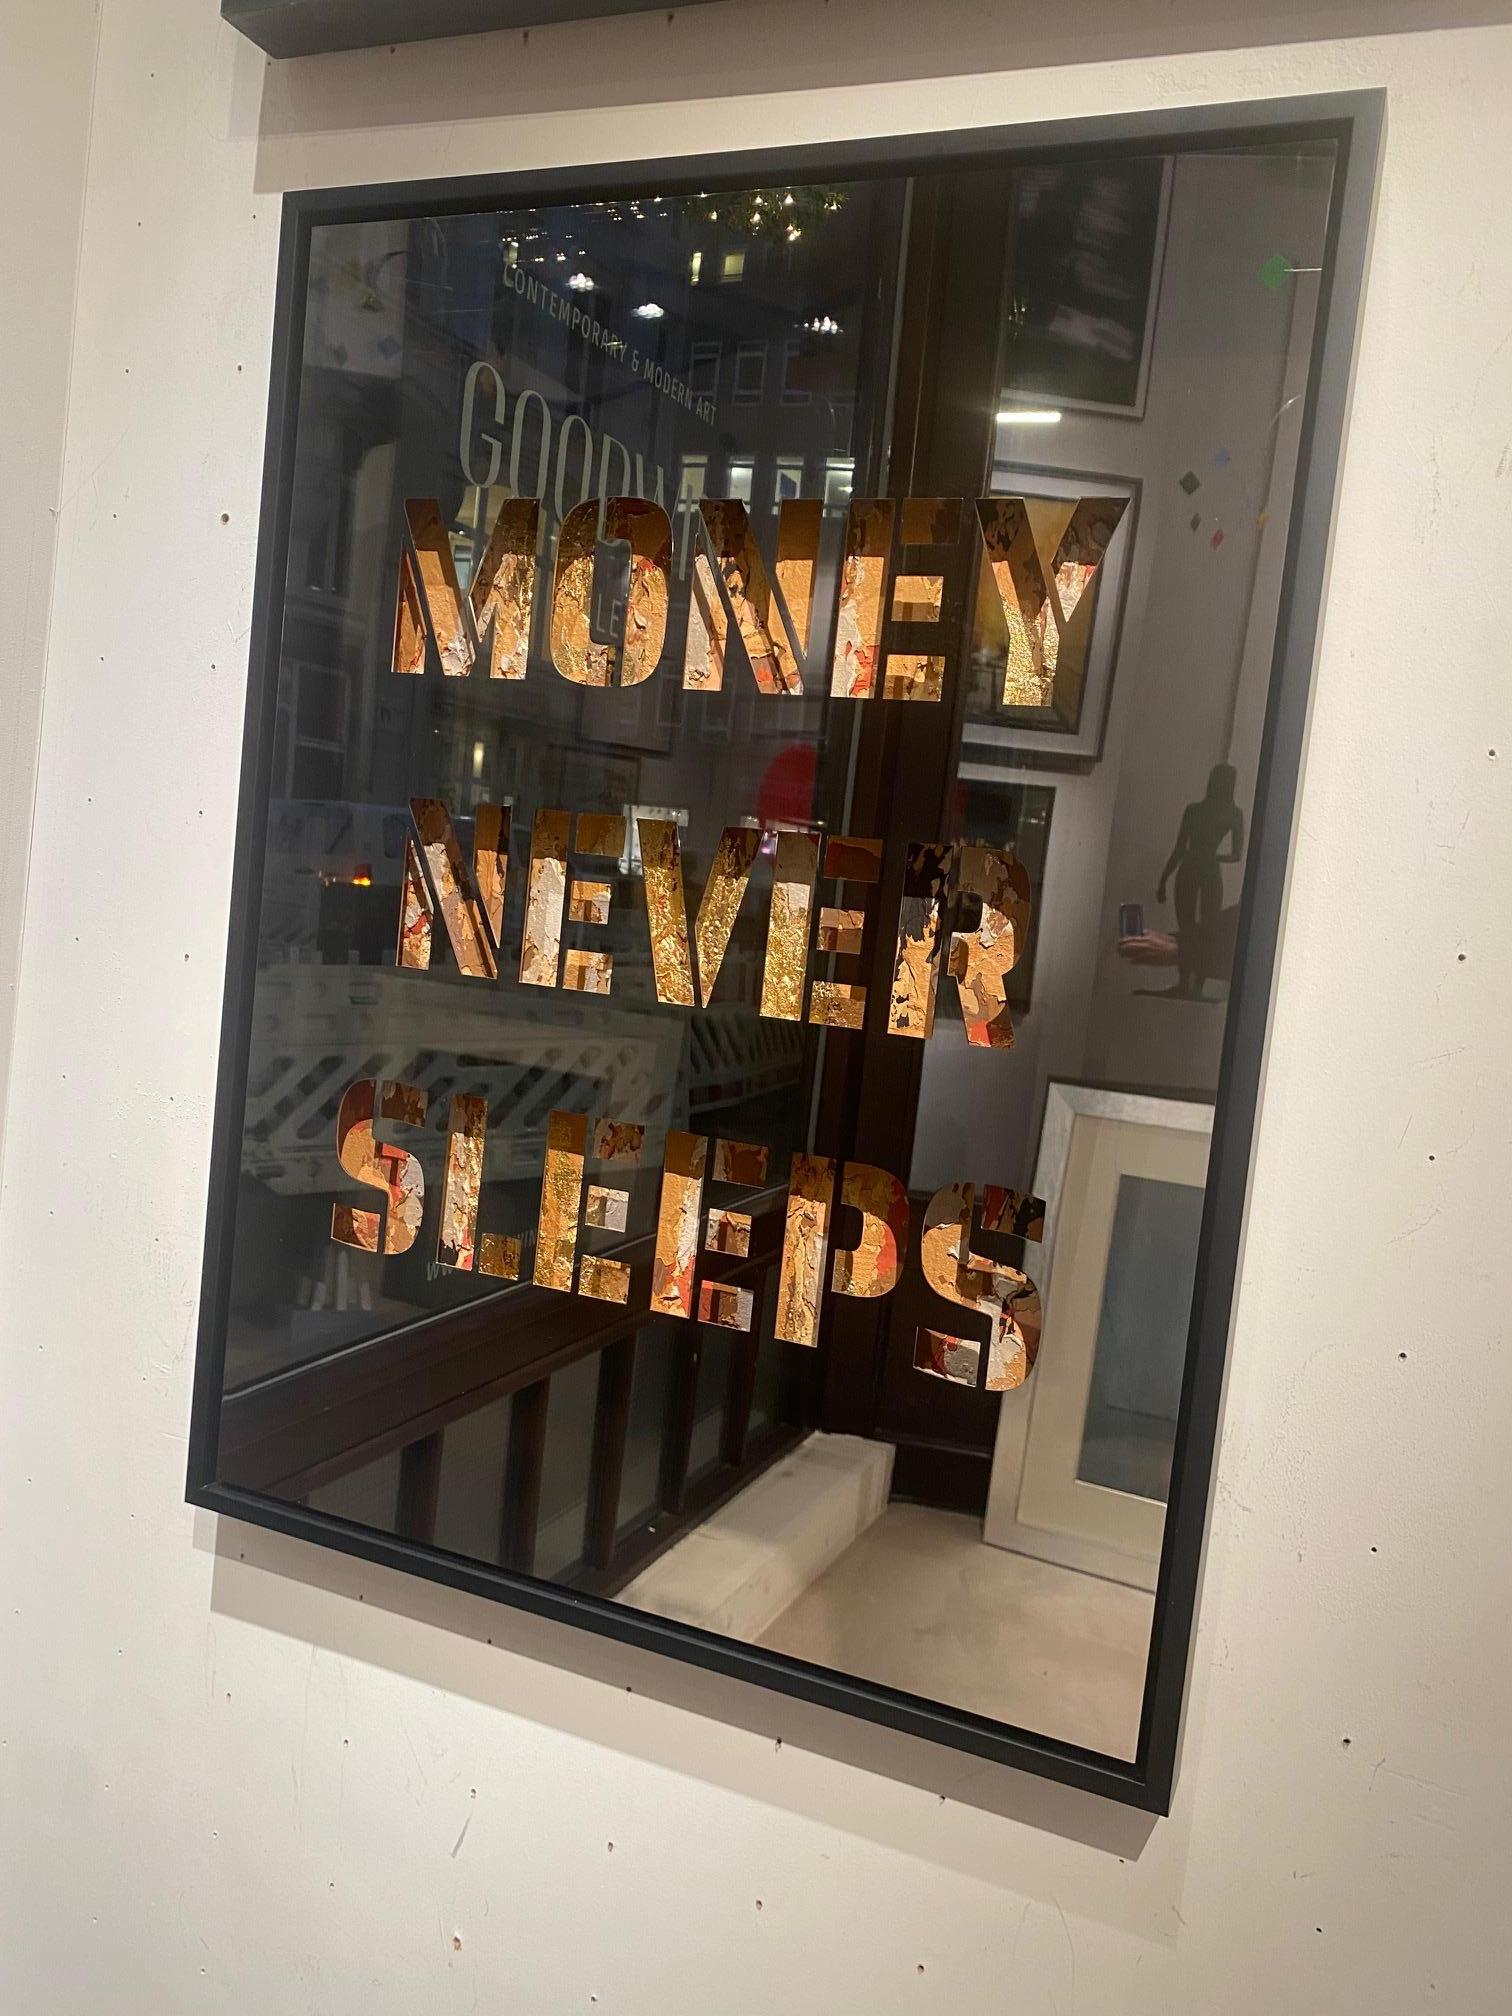 Money Never Sleeps - zeitgenössischer Pop-Art-Ausschnitt, Blattgold mit silberner Beschriftung im Angebot 2